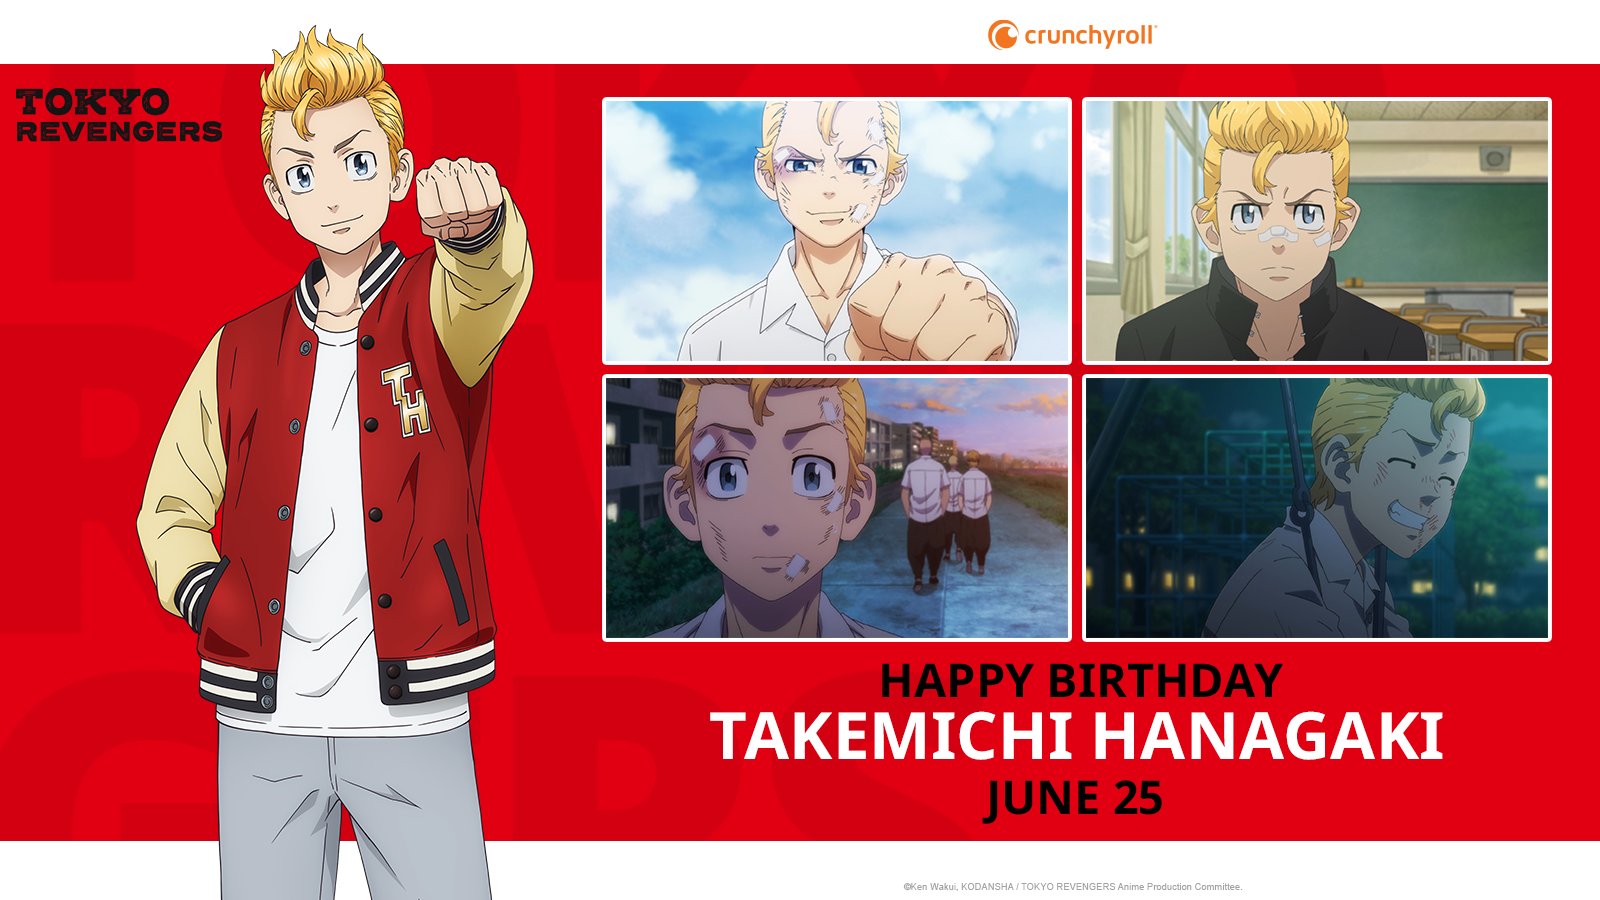 Crunchyroll.pt - (25/06) Feliz aniversário, Takemichi! 👊